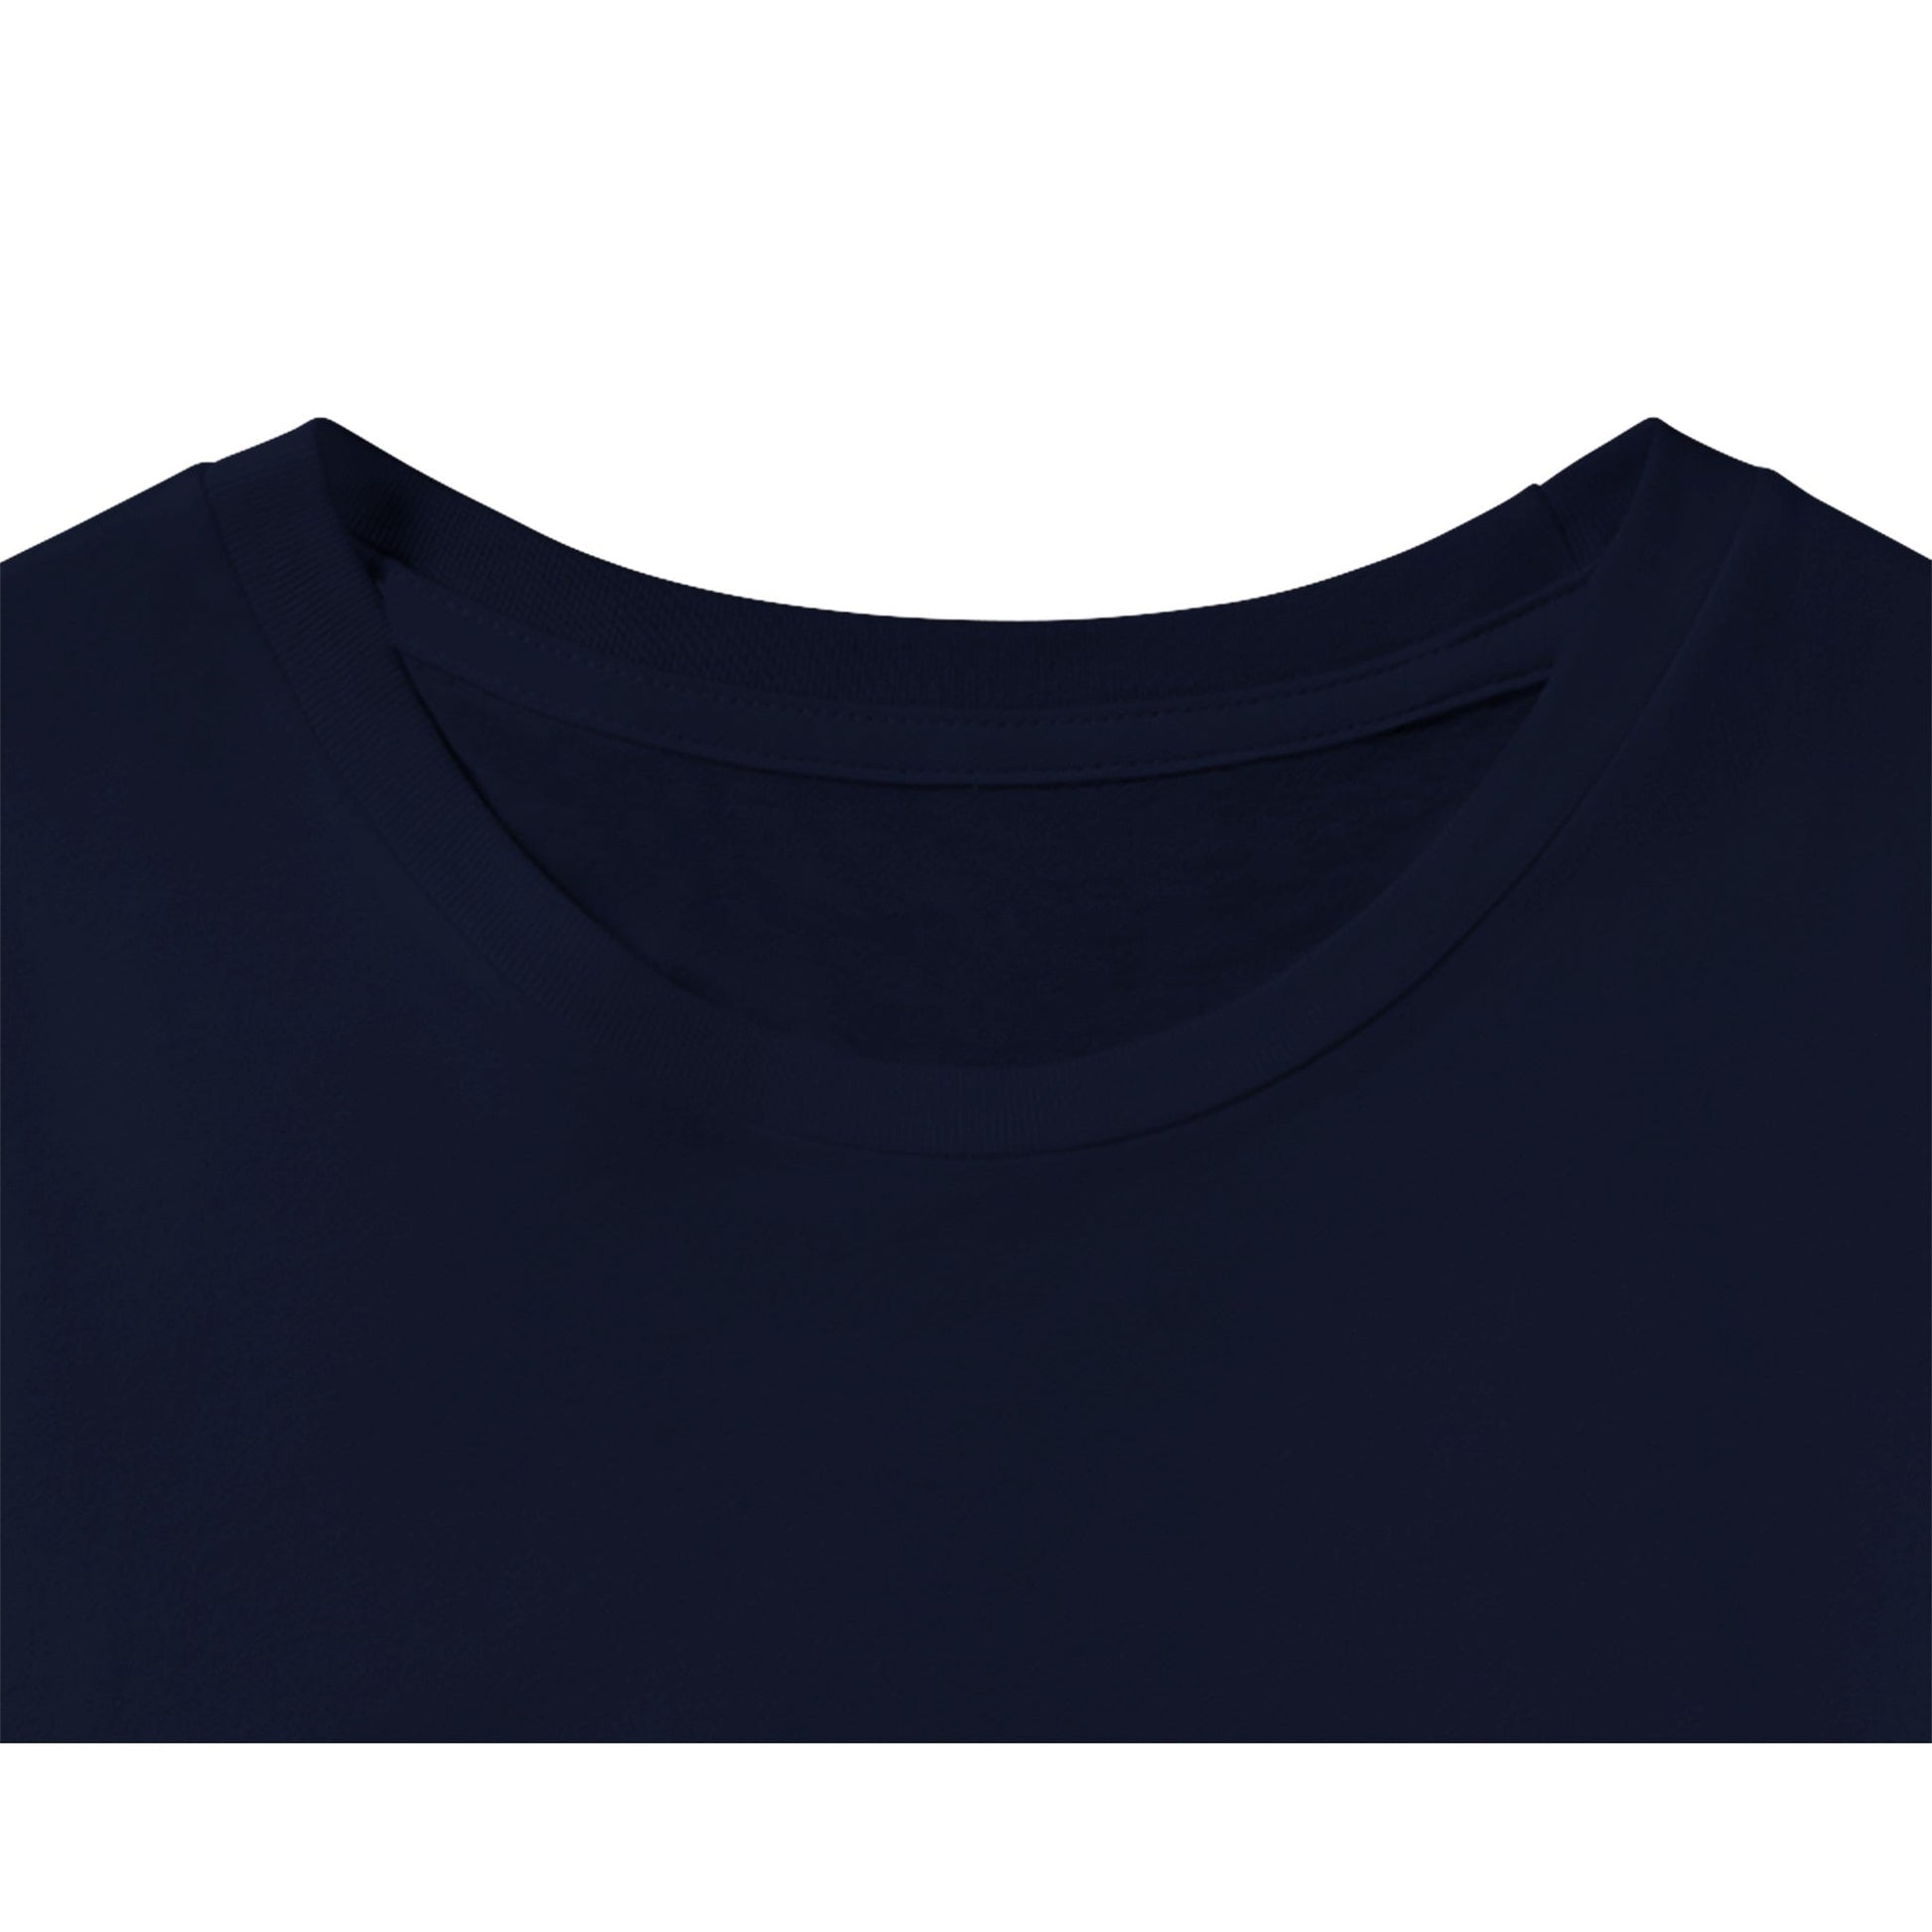 Premium Women's Crewneck T-shirt with Golden Retriever logo - Hobbster